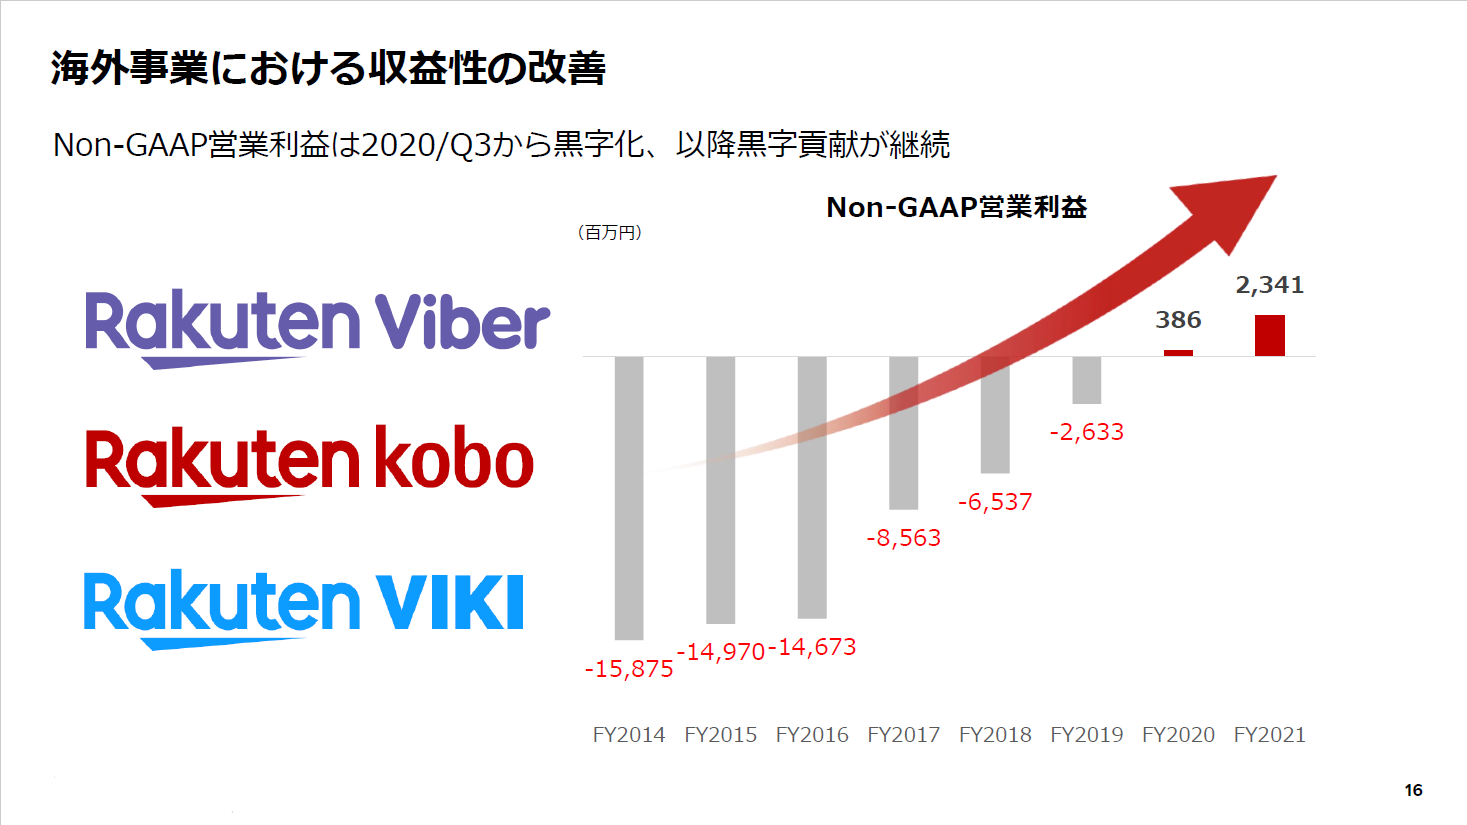 「Rakuten Viber」などの海外事業は黒字化以降順調に成長。「Rakuten Rewards」や楽天シンフォニーなどと合わせて海外での売り上げも高めていく姿勢を見せている